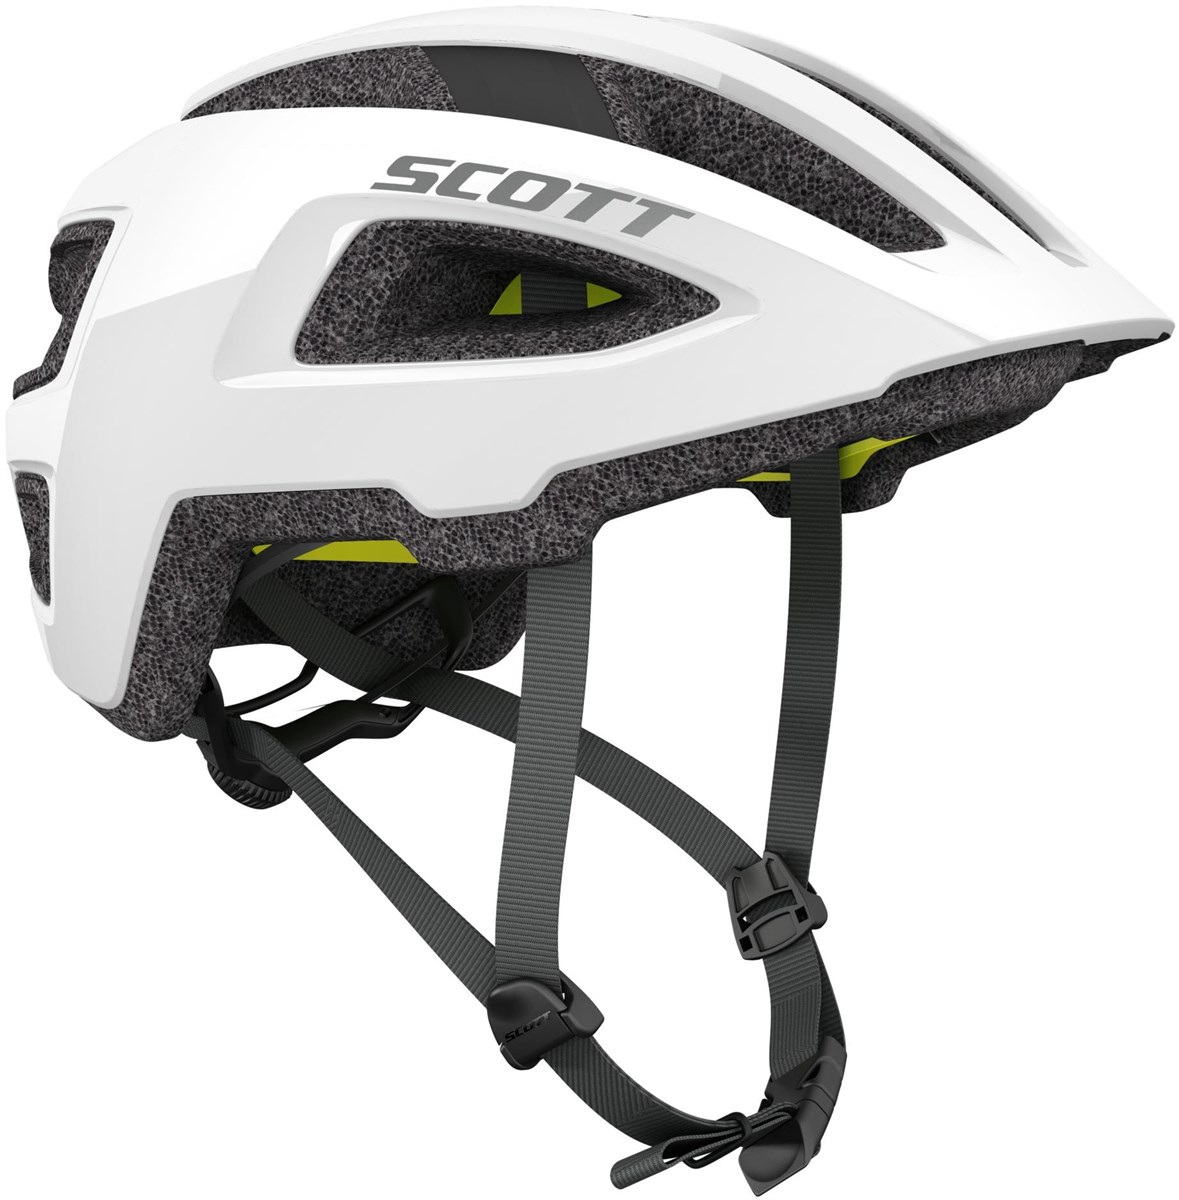 Scott Groove Plus MTB Cycling Helmet product image